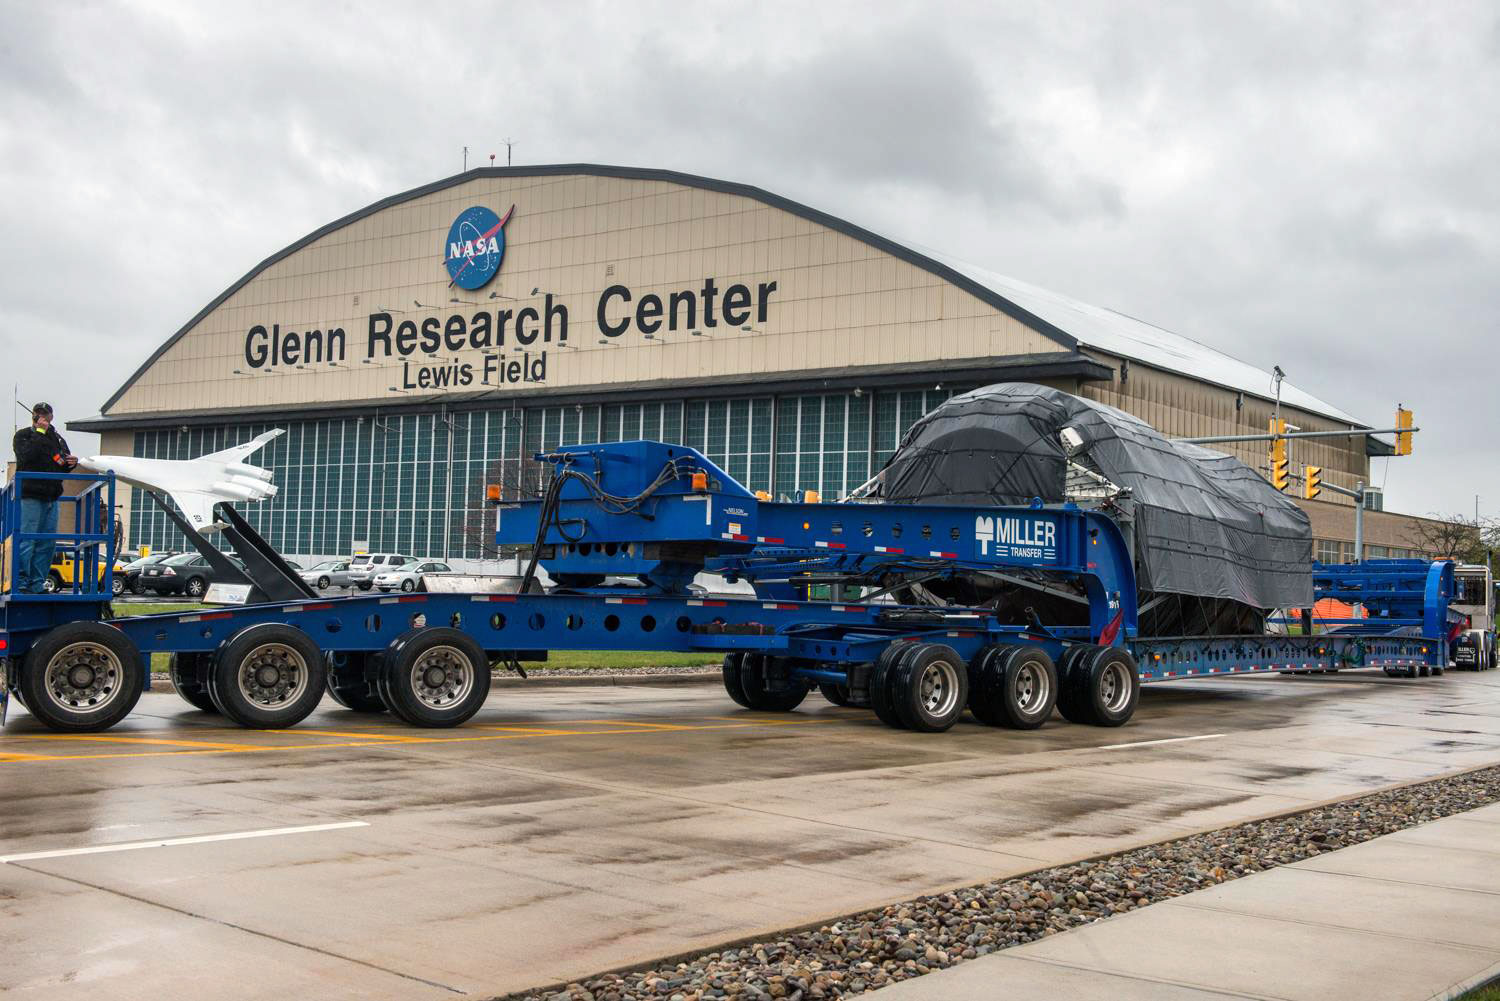 NASA Glenn (Ohio): Shuttle Centaur-G Prime - collectSPACE: Messages1500 x 1001